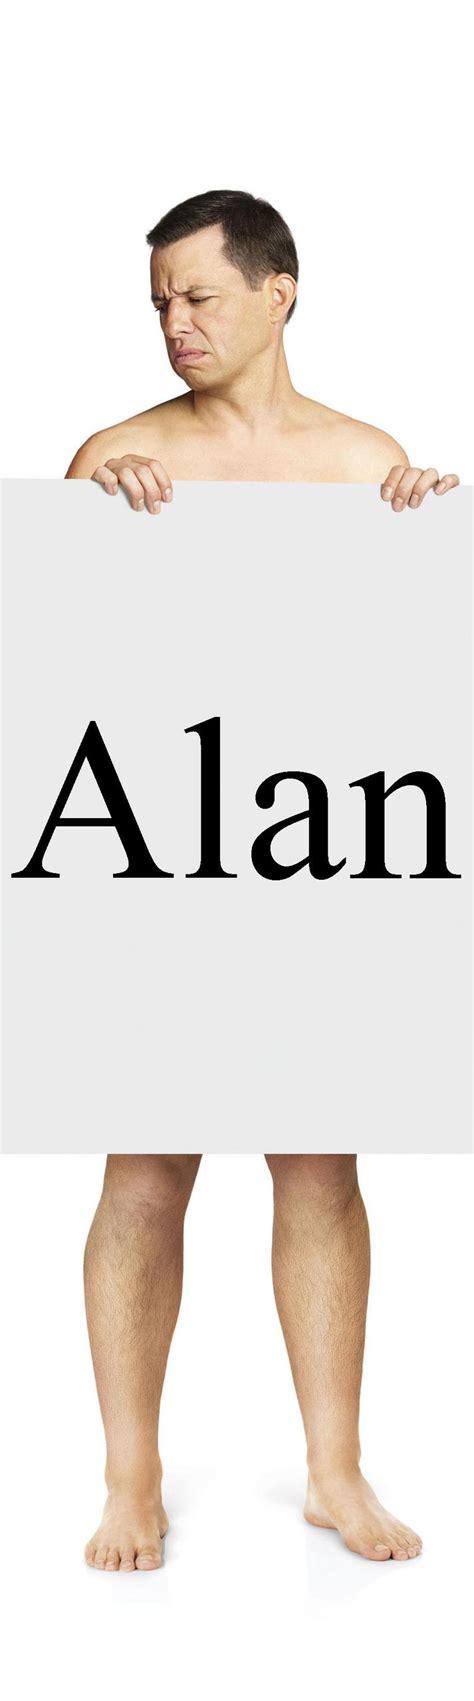 Alan   Two and a Half Men Photo  25081641    Fanpop